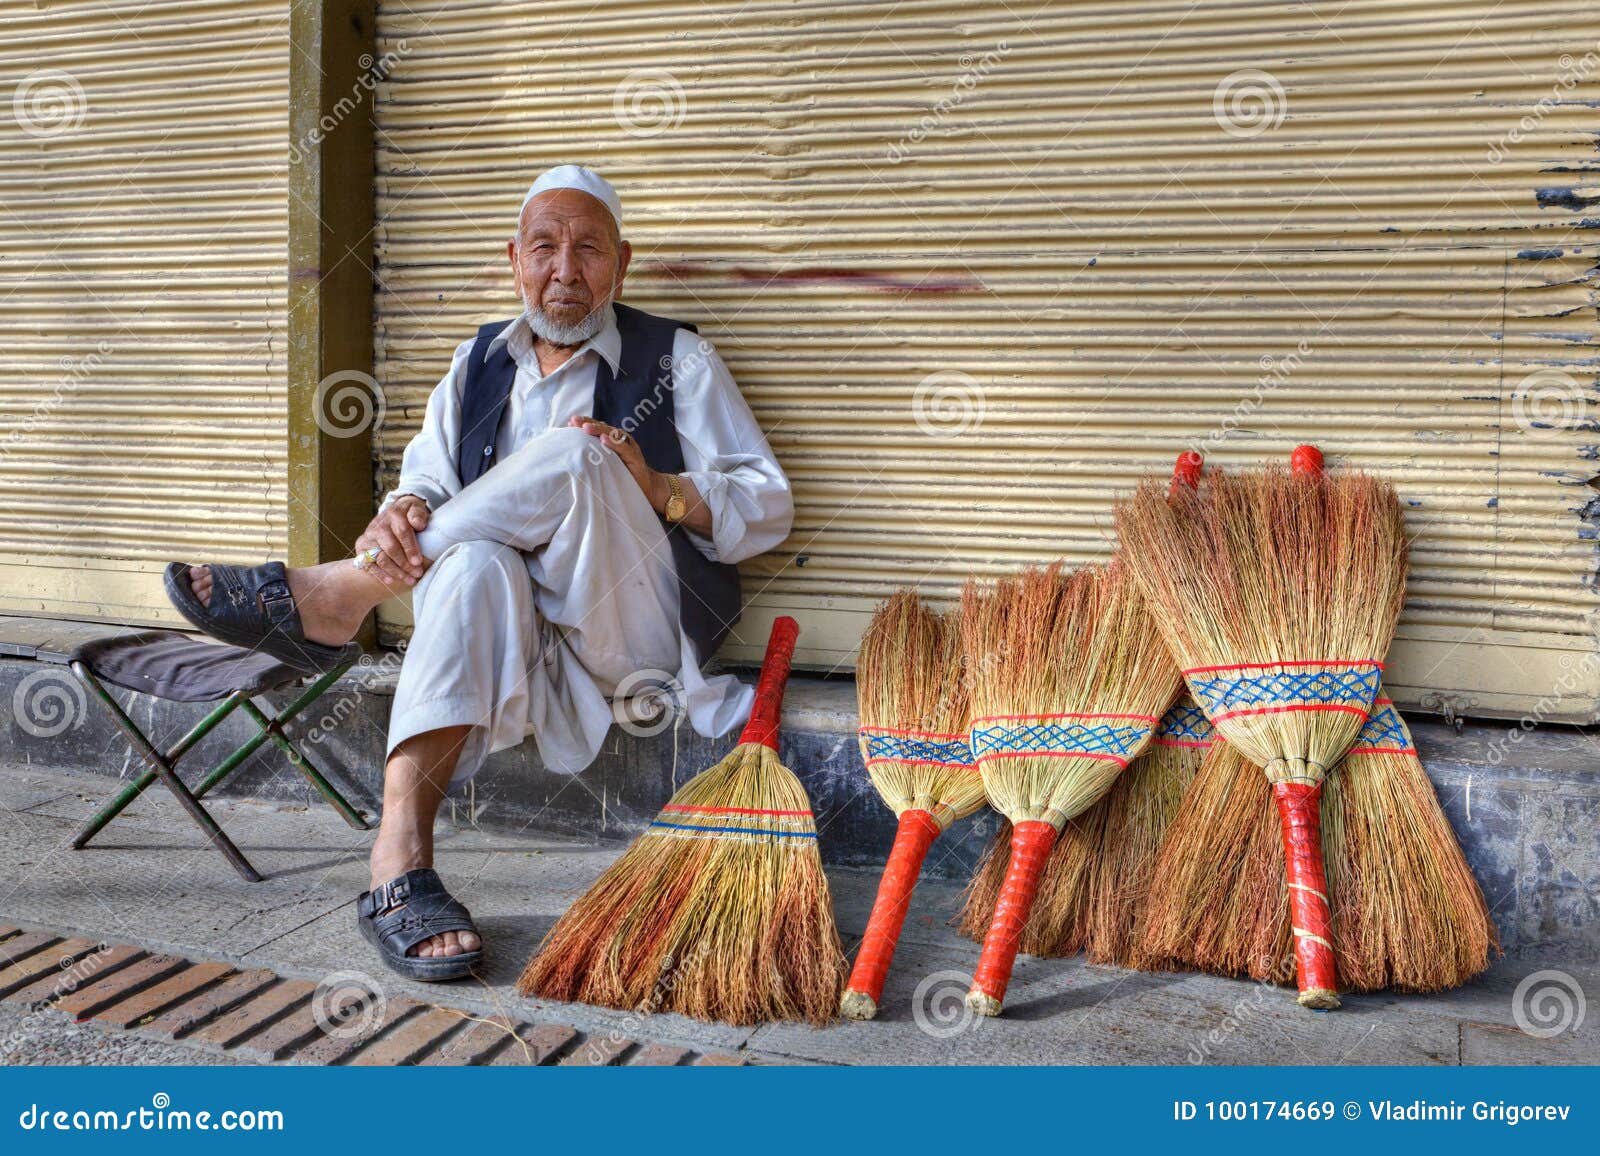 old-man-sells-brooms-city-street-fars-province-shiraz-iran-april-old-man-selling-brooms-city-street-100174669.jpg